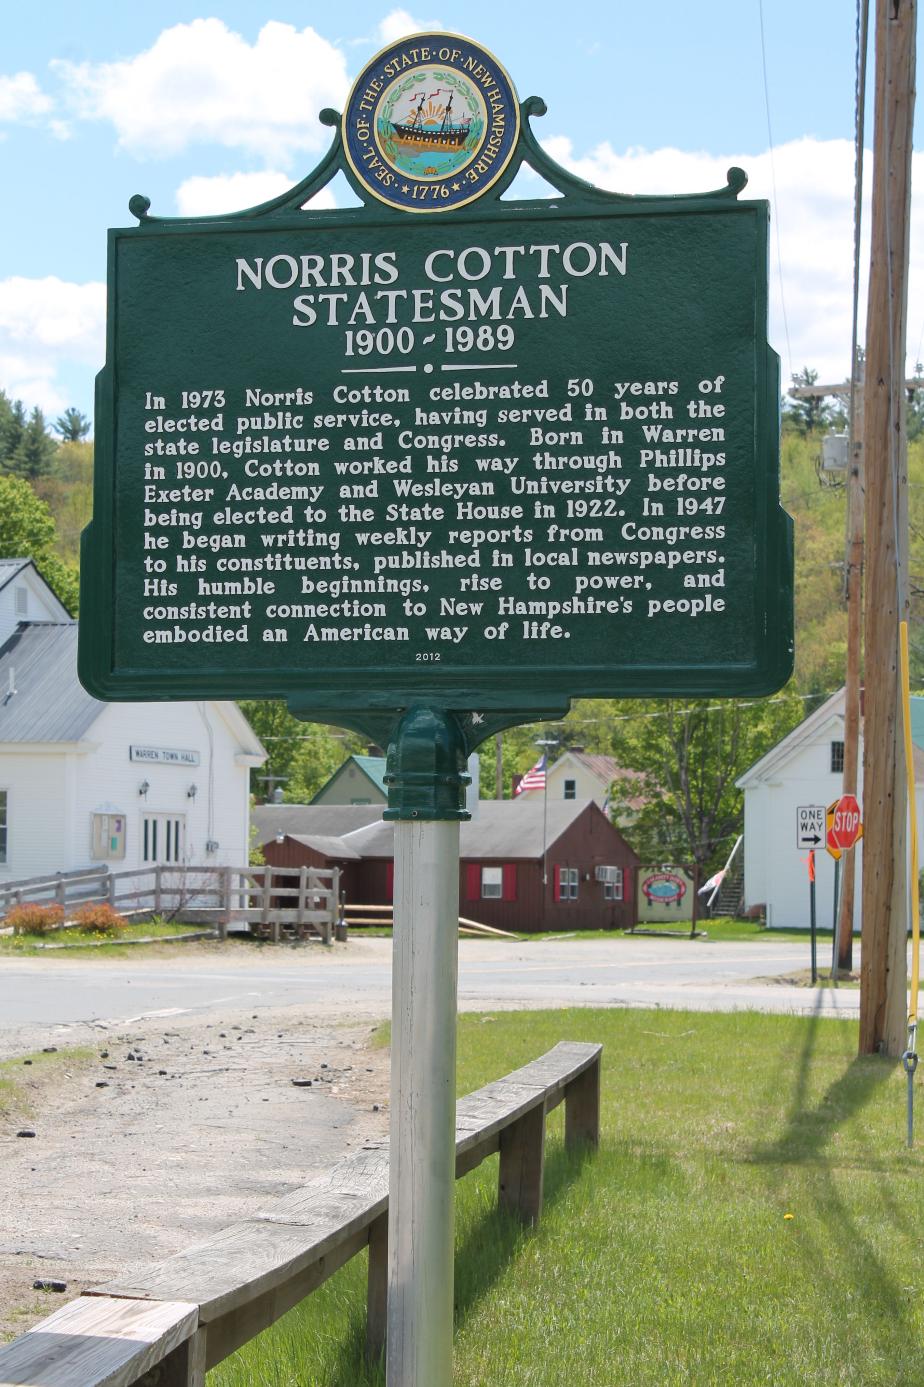 Norris Cotton Statesman Historical Marker